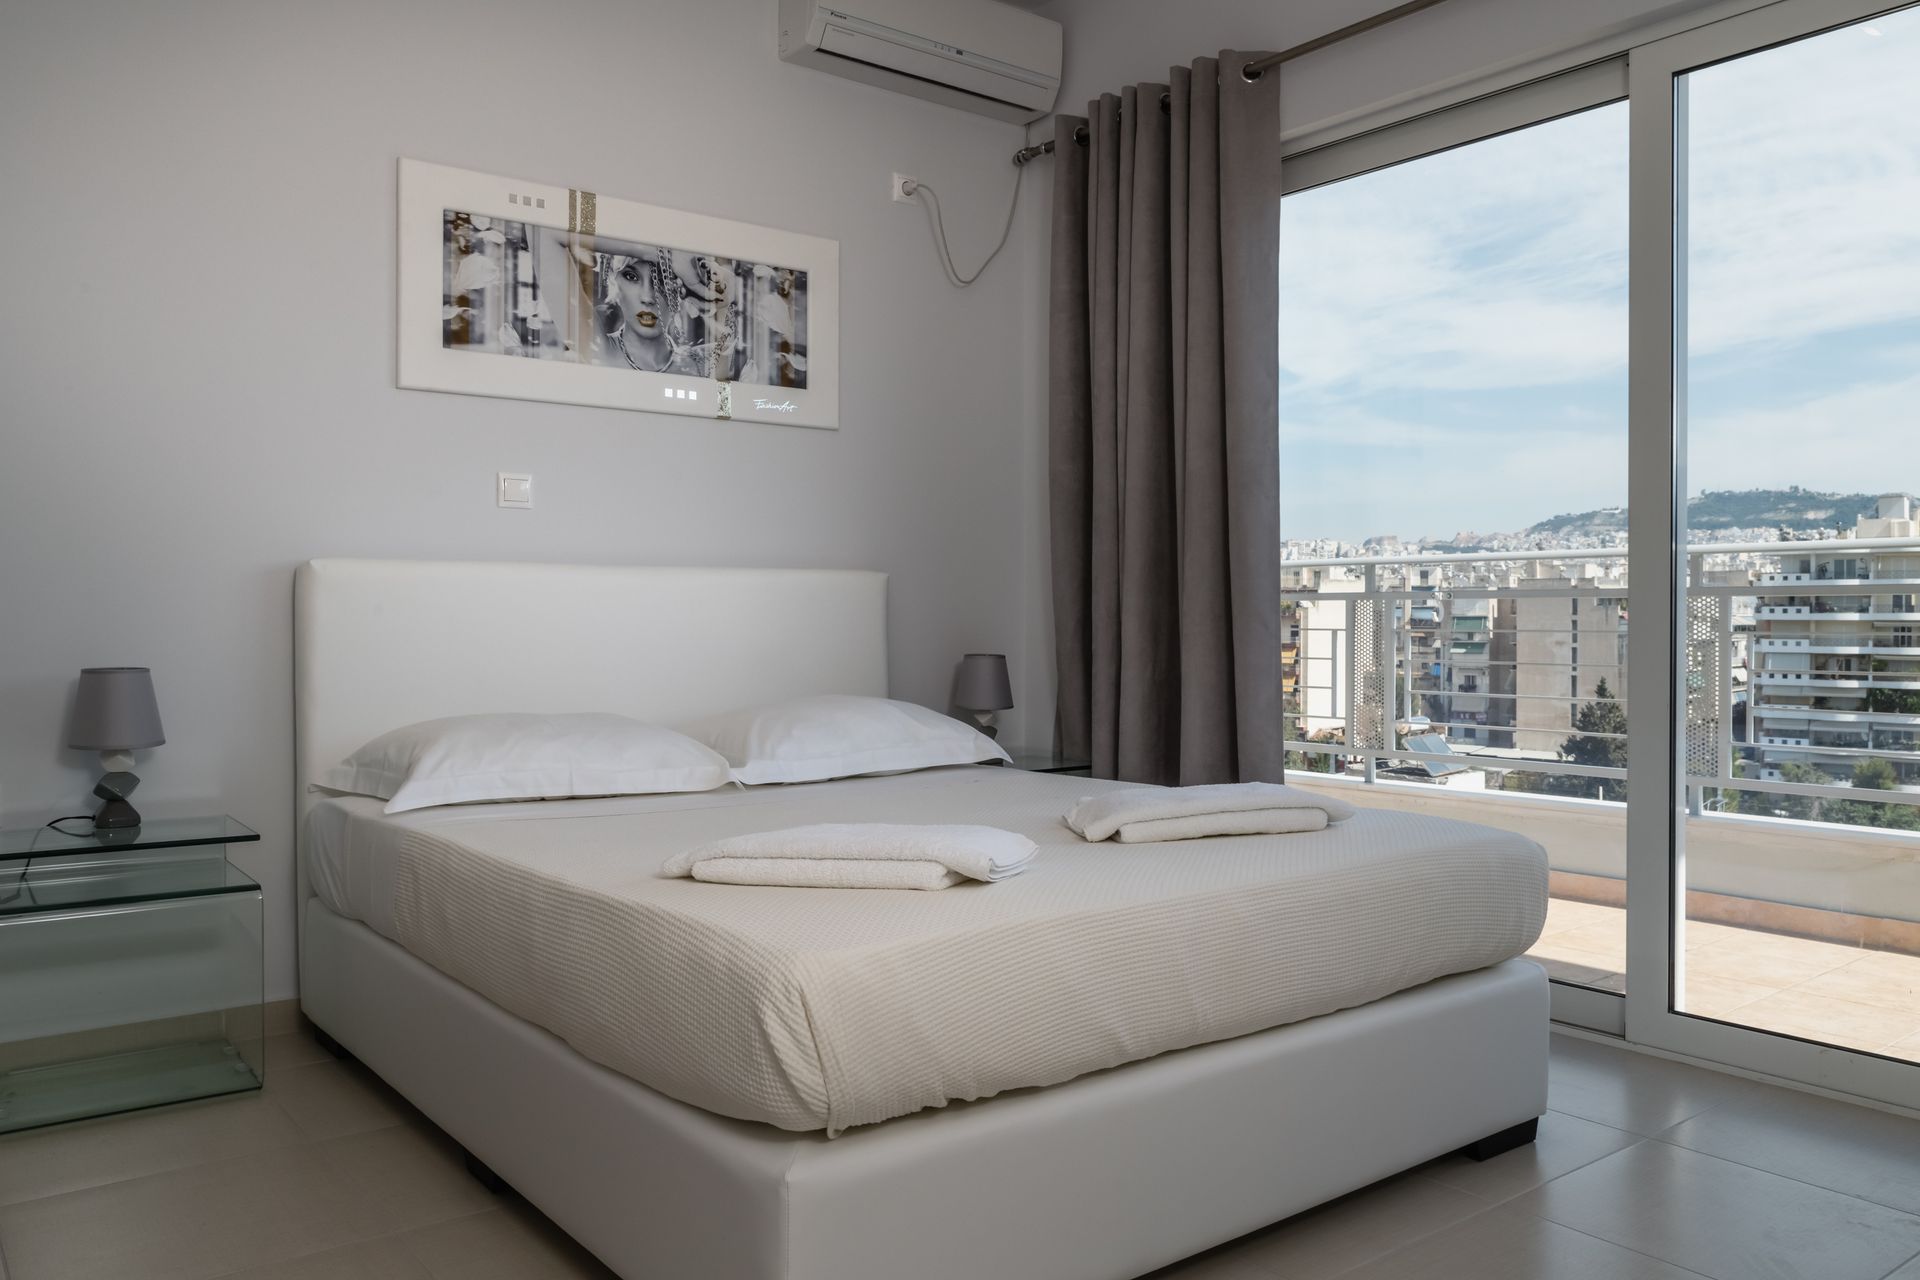 Alekos Apartments Athens - Αθήνα ✦ 3 Ημέρες (2 Διανυκτερεύσεις) ✦ 2 άτομα ✦ Χωρίς Πρωινό ✦ έως 30/09/2020 ✦ Free WiFi